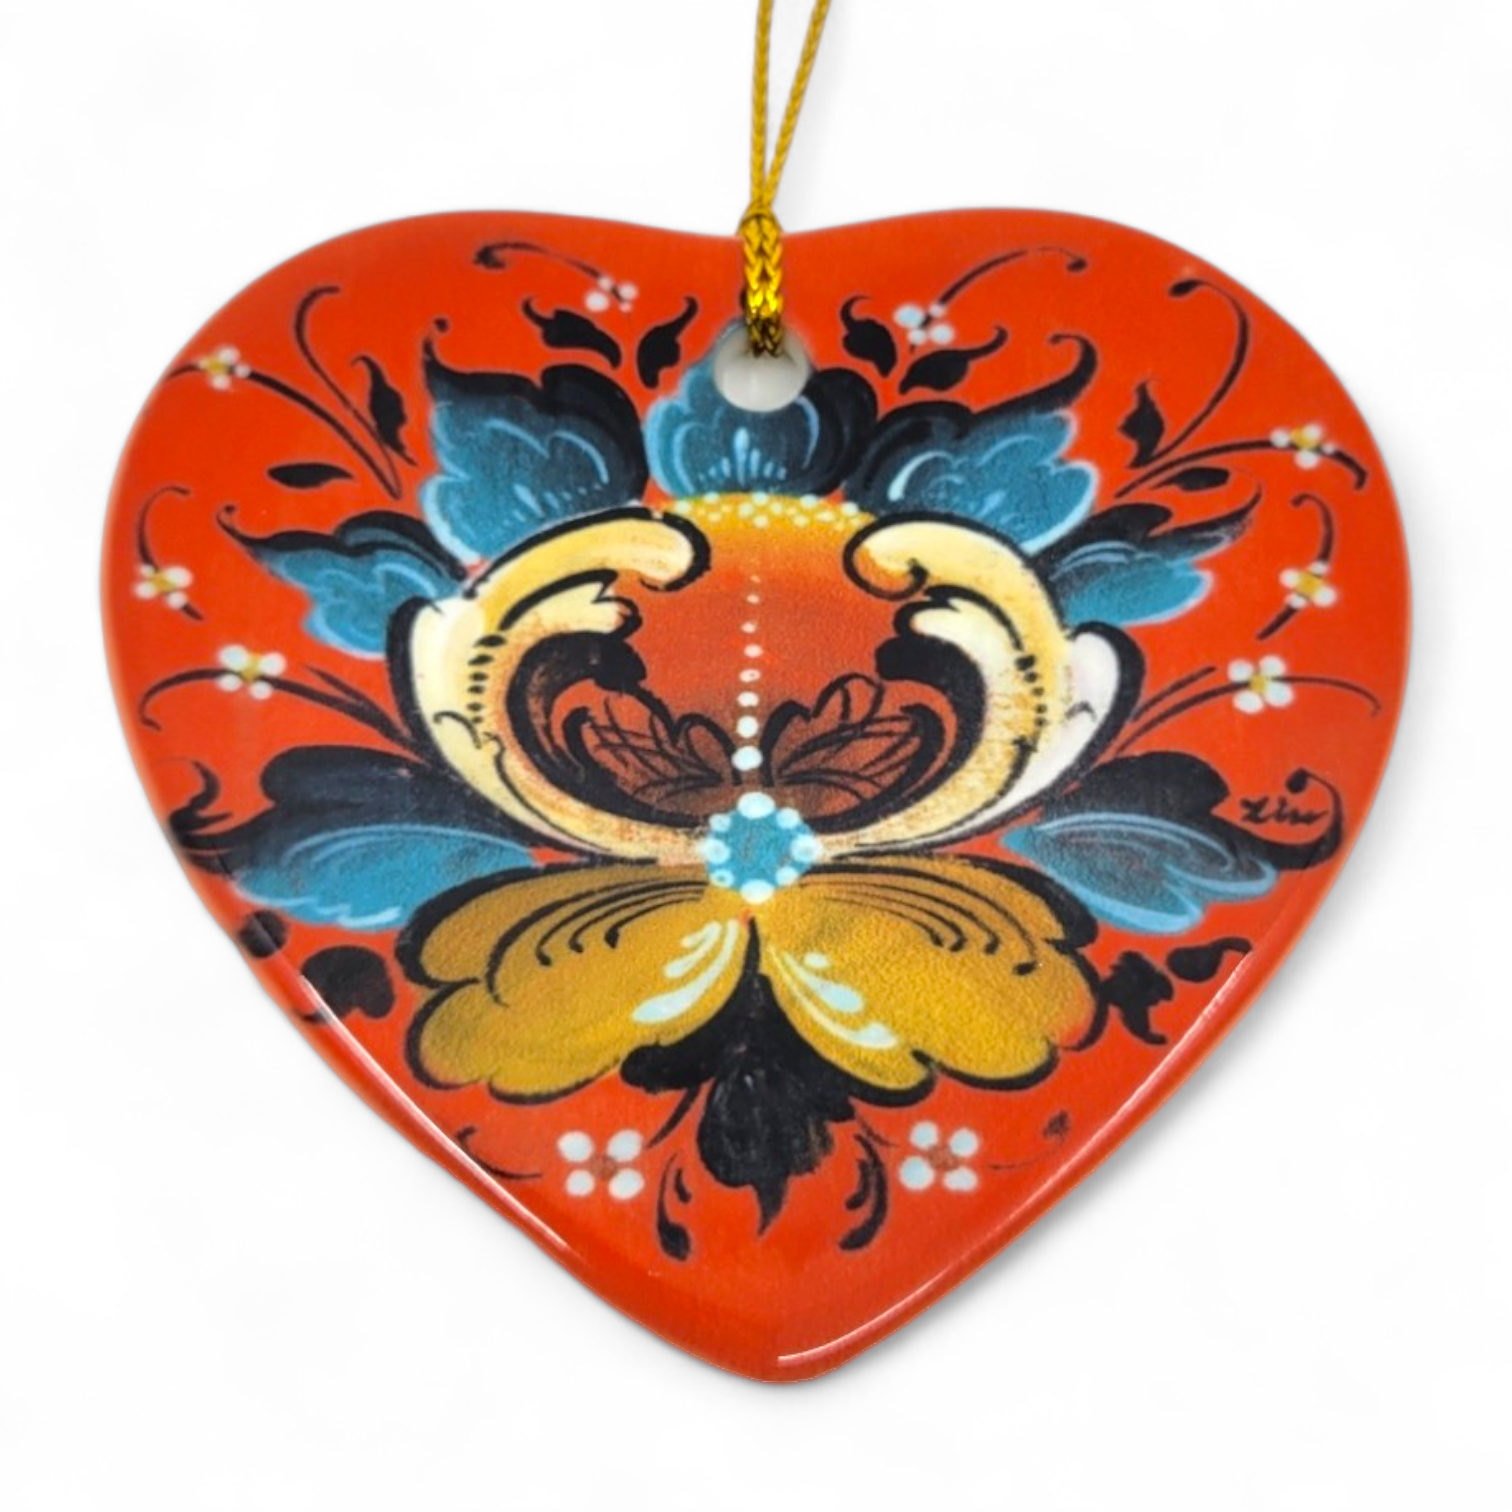 Ornament: 3" Heart Shaped Rosemaling, Lise Lorentzen